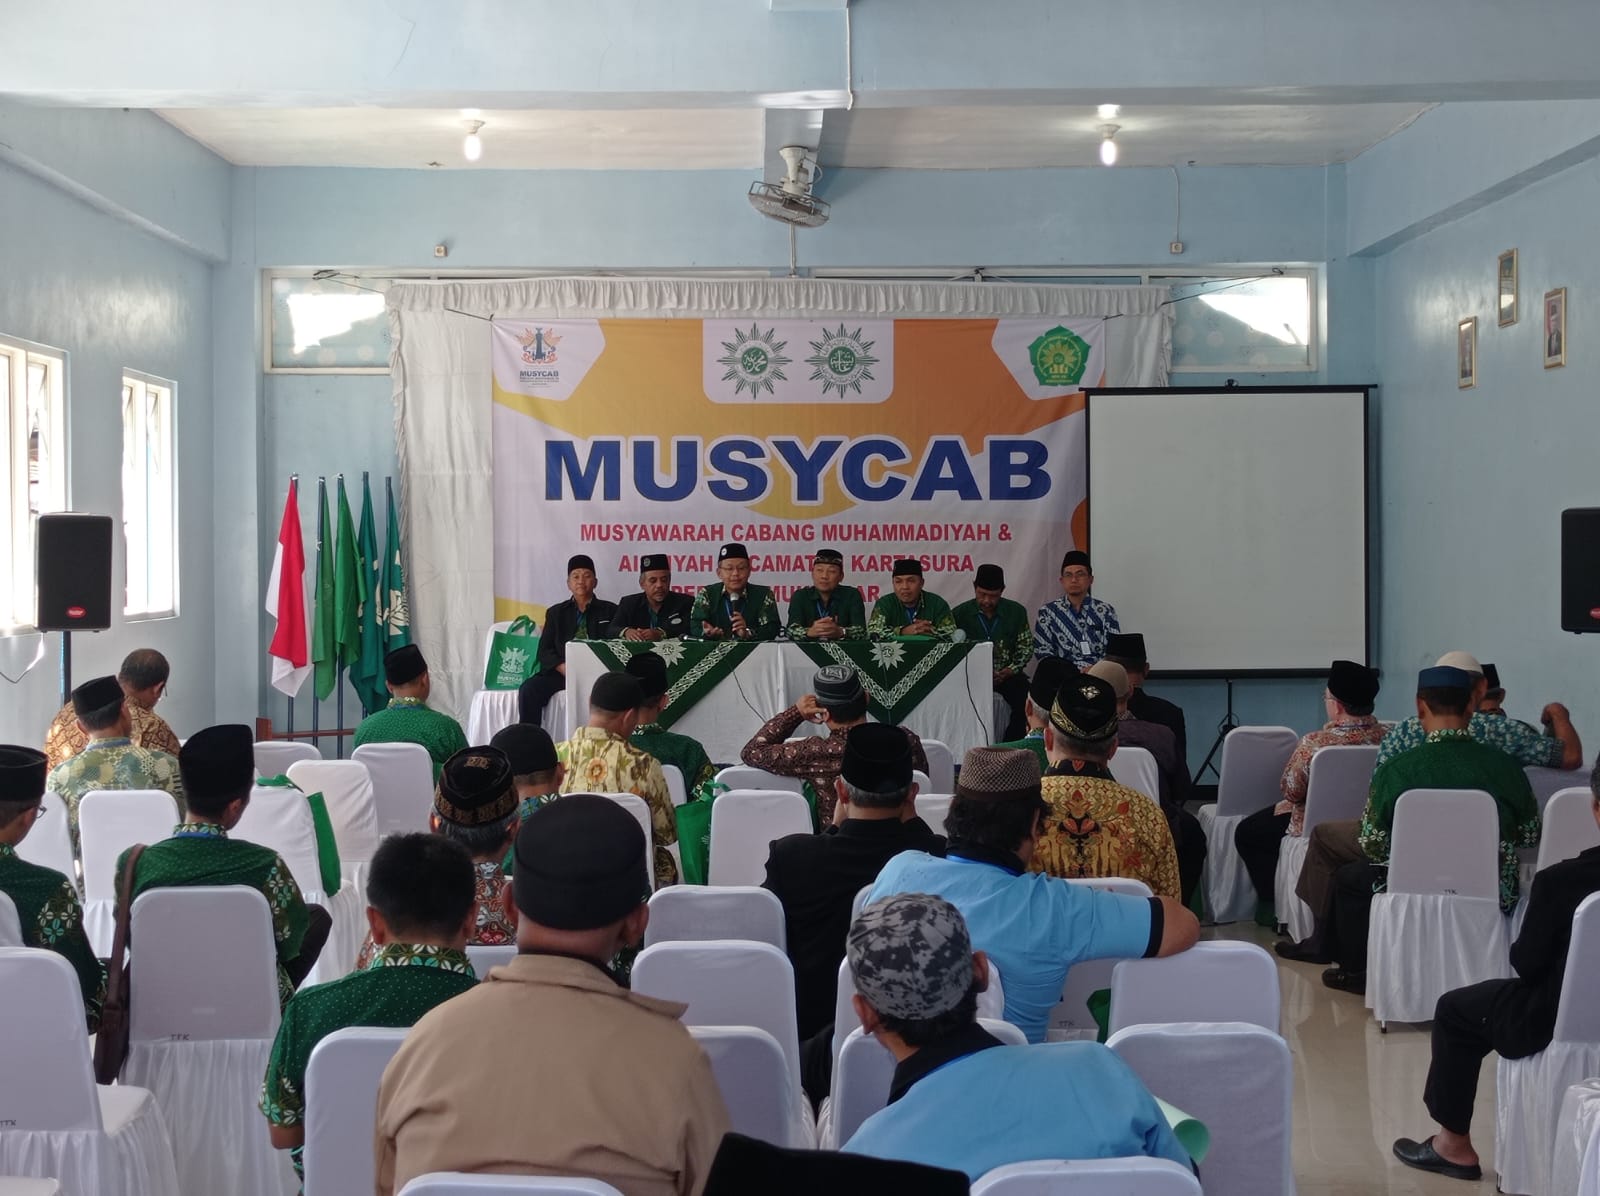 Musycab Muhammadiyah